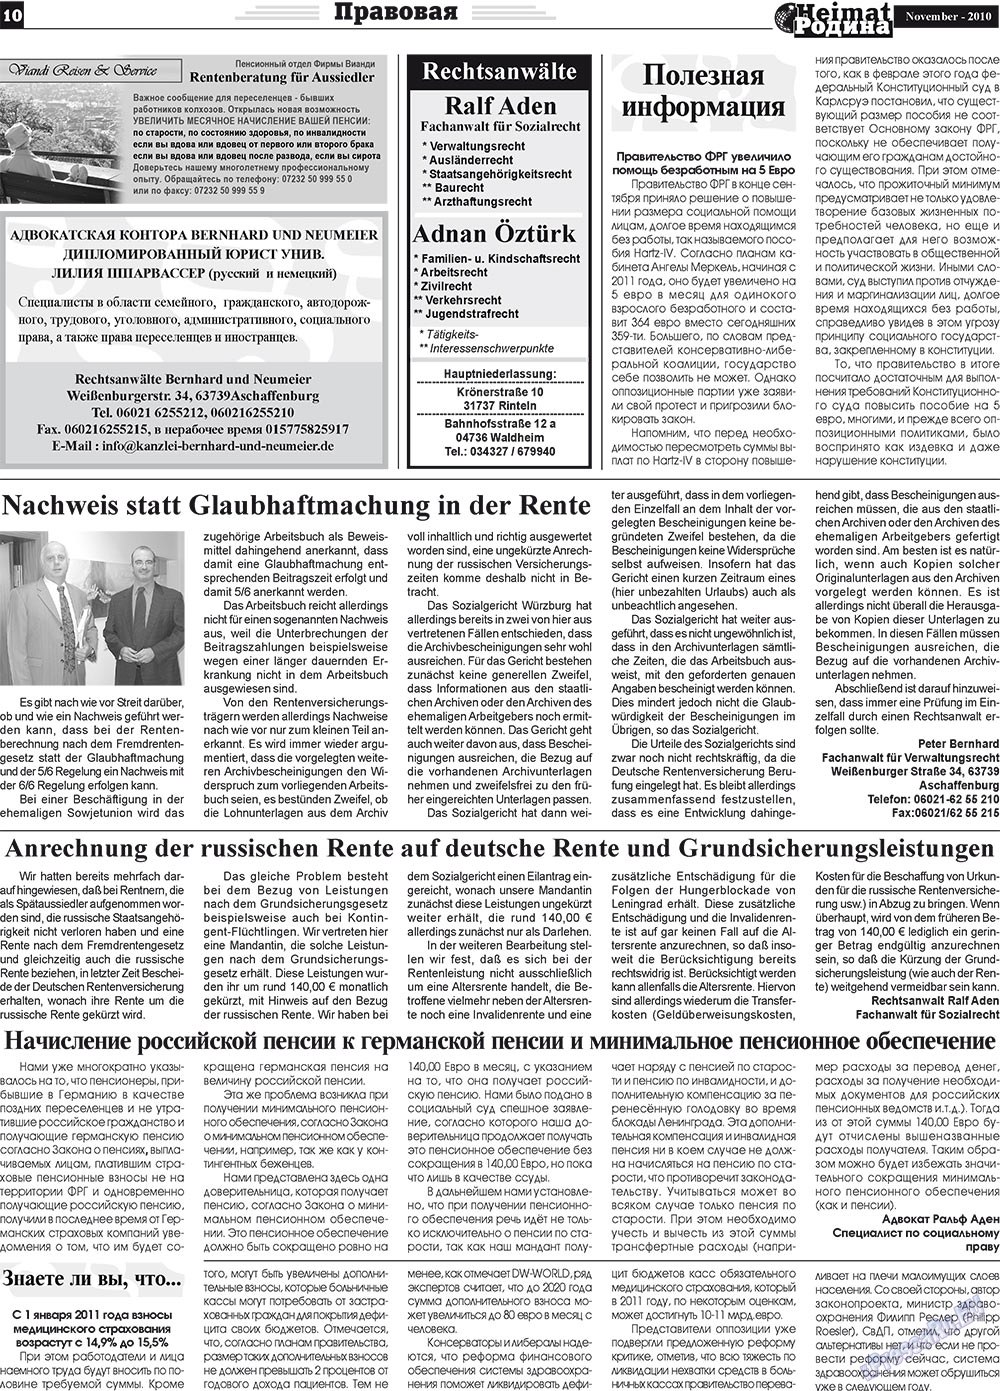 Heimat-Родина, газета. 2010 №11 стр.10